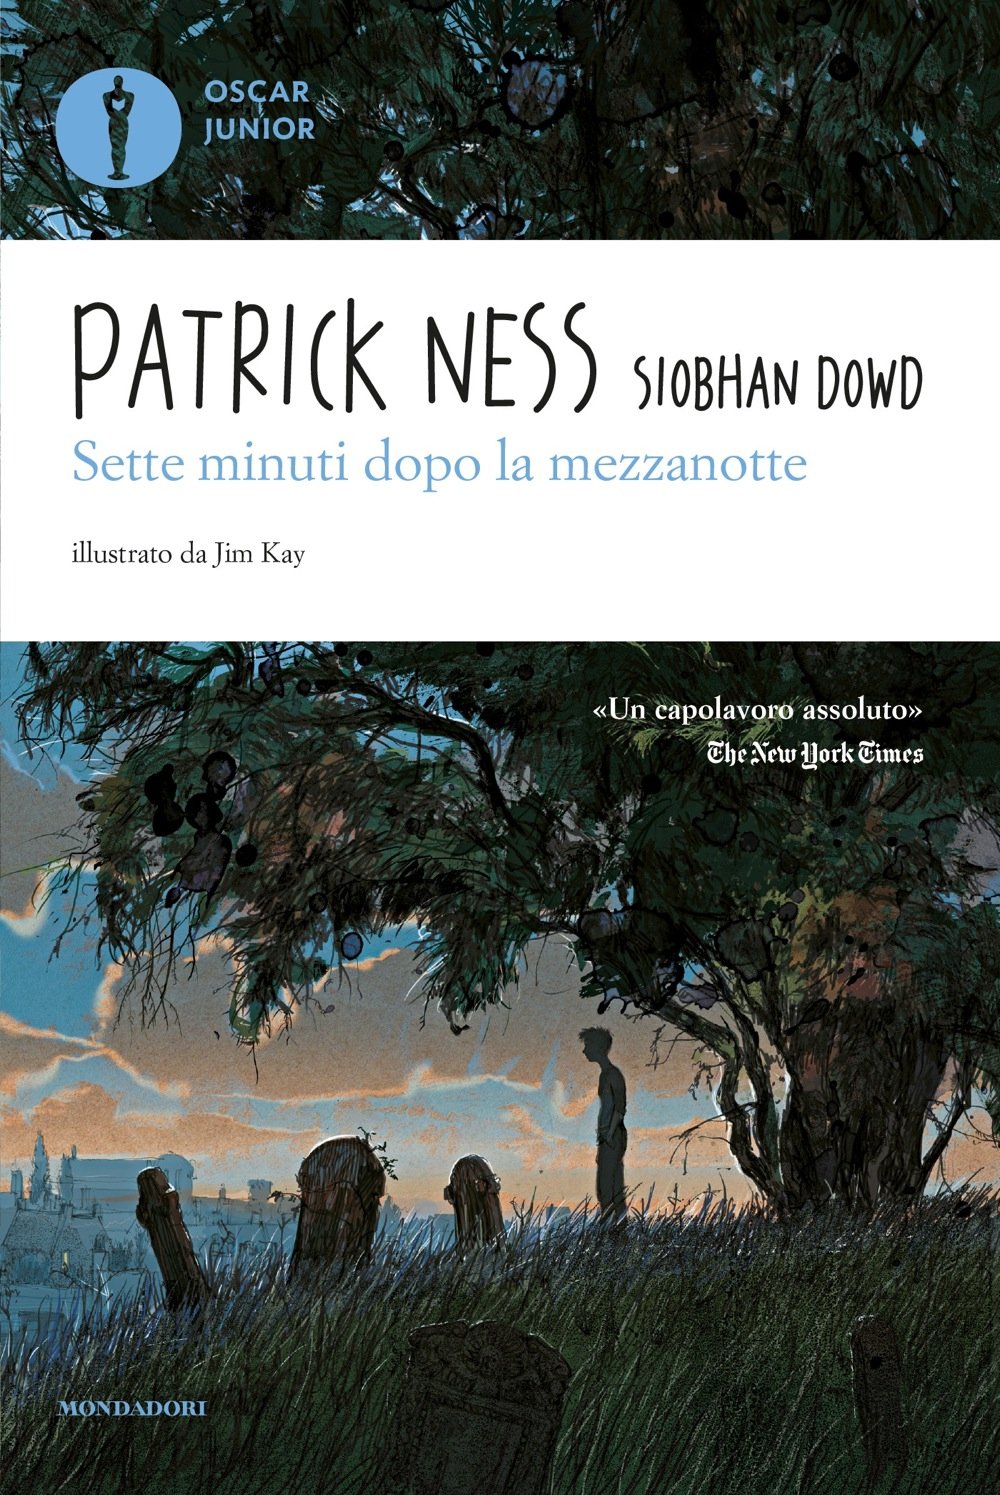 Ness P., Siobhan D. (2012). Sette minuti dopo la mezzanotte. Mondadori